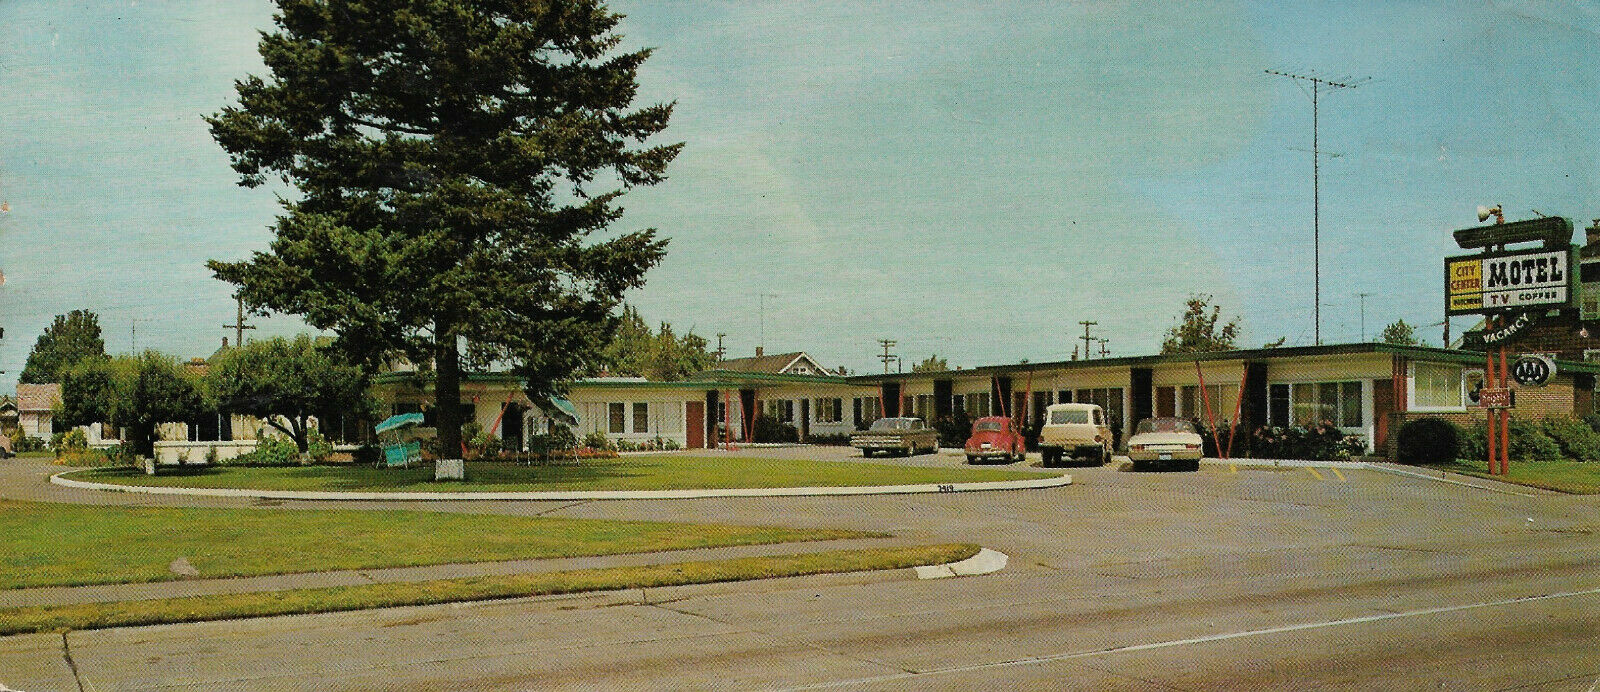 USA-Washington-Bellingham-The City Center Motel with parking - 1966